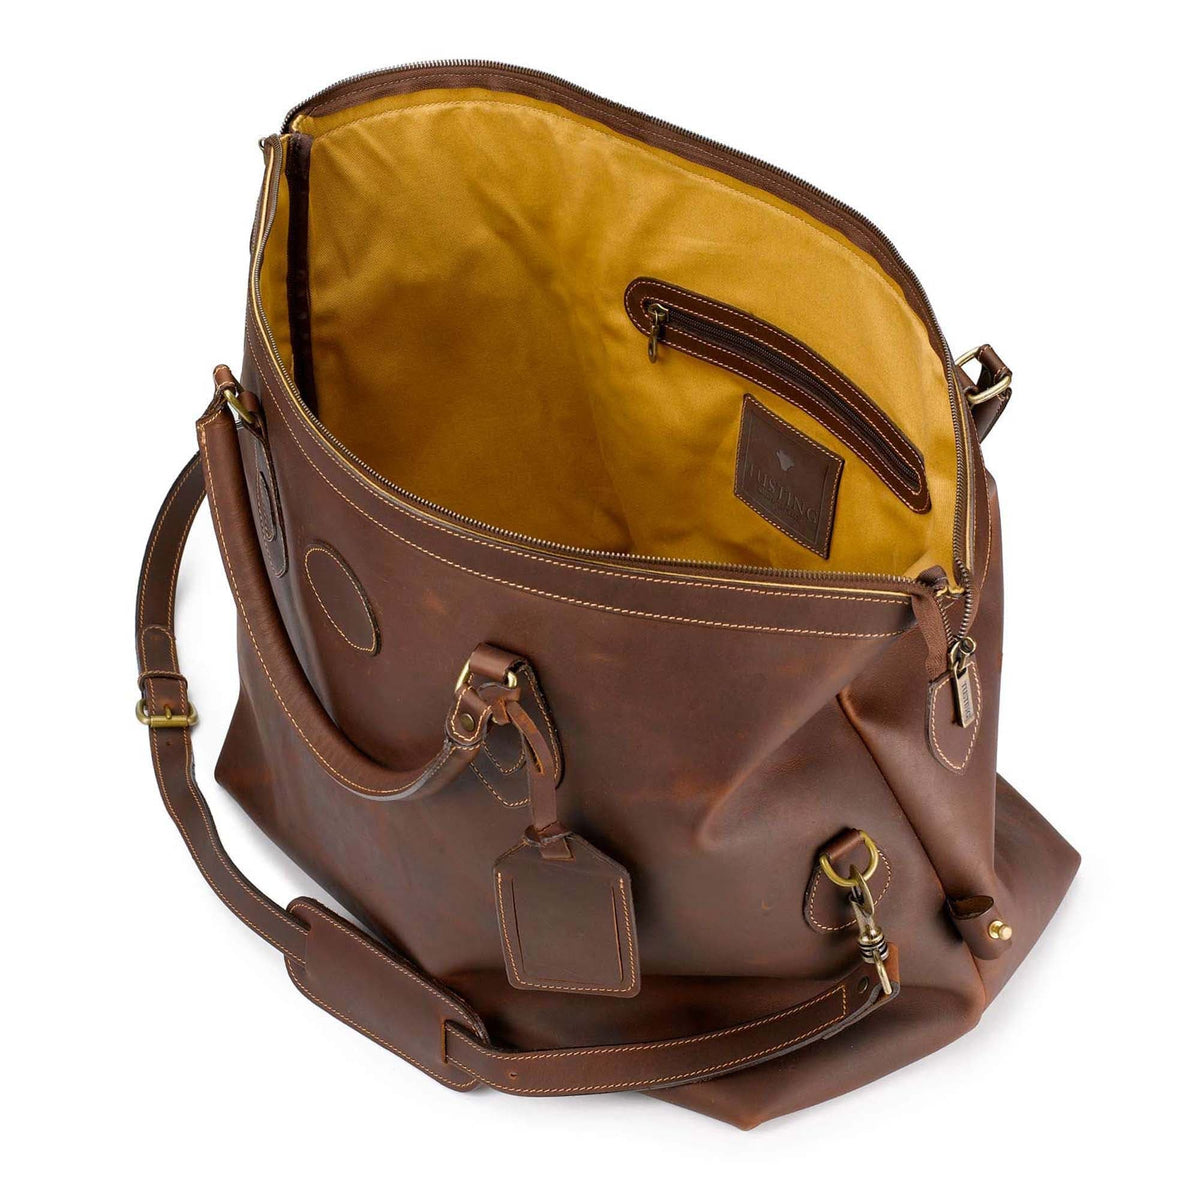 Tusting Travel Large Explorer Leather Tote Bag